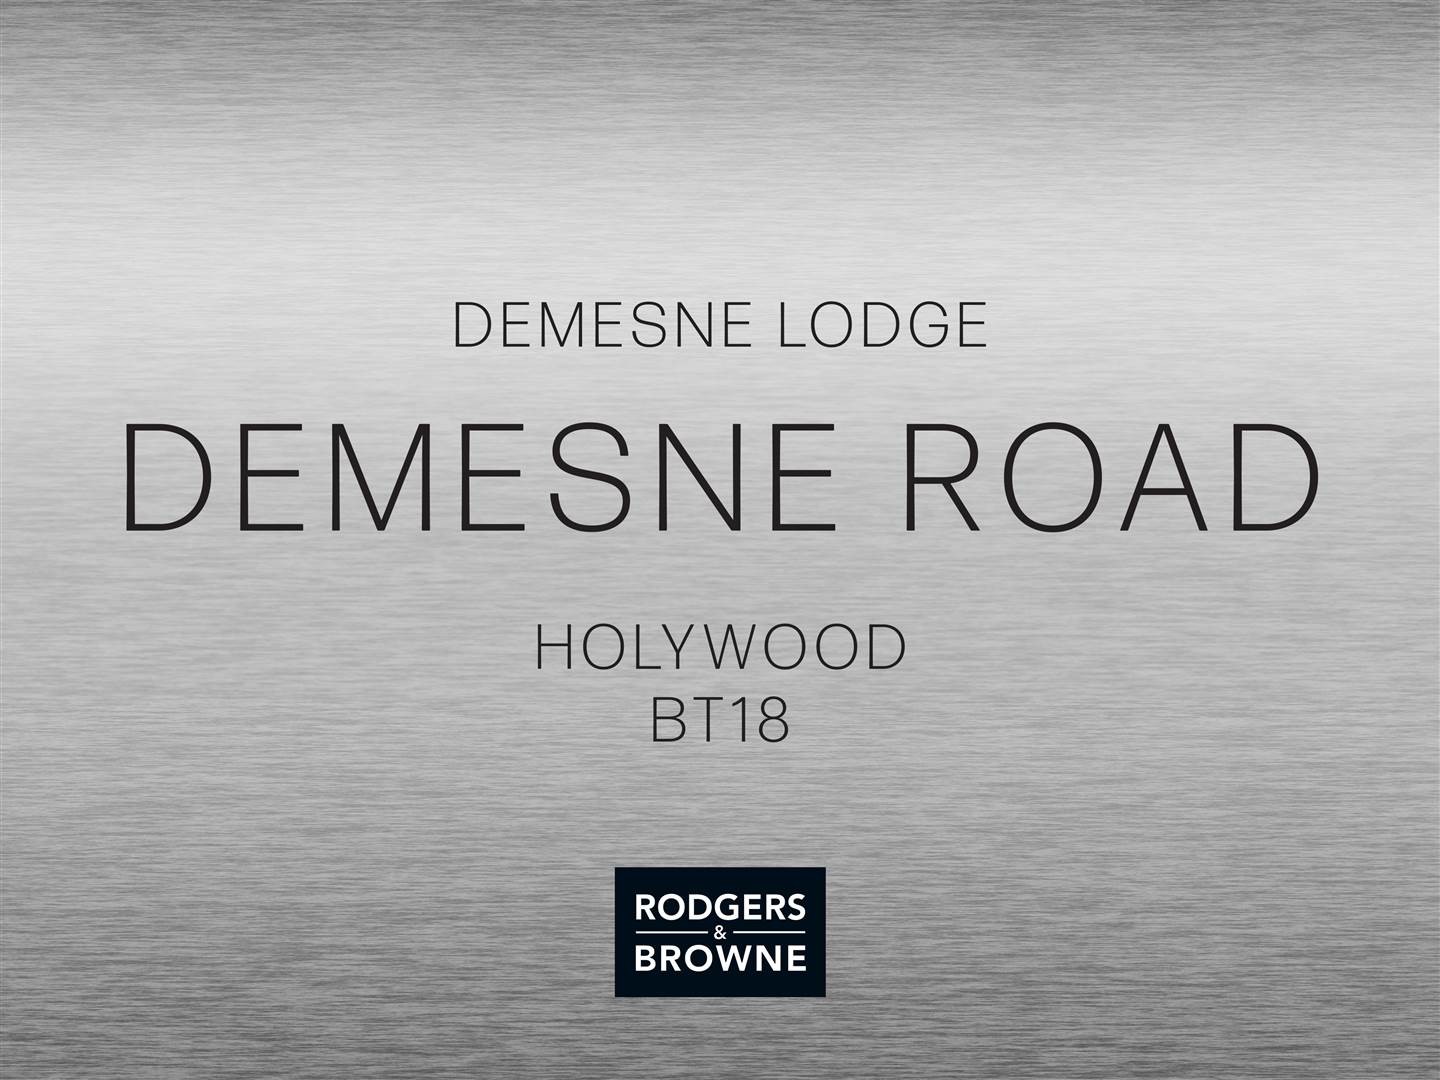 Demesne Lodge, Desmesne Road, Holywood